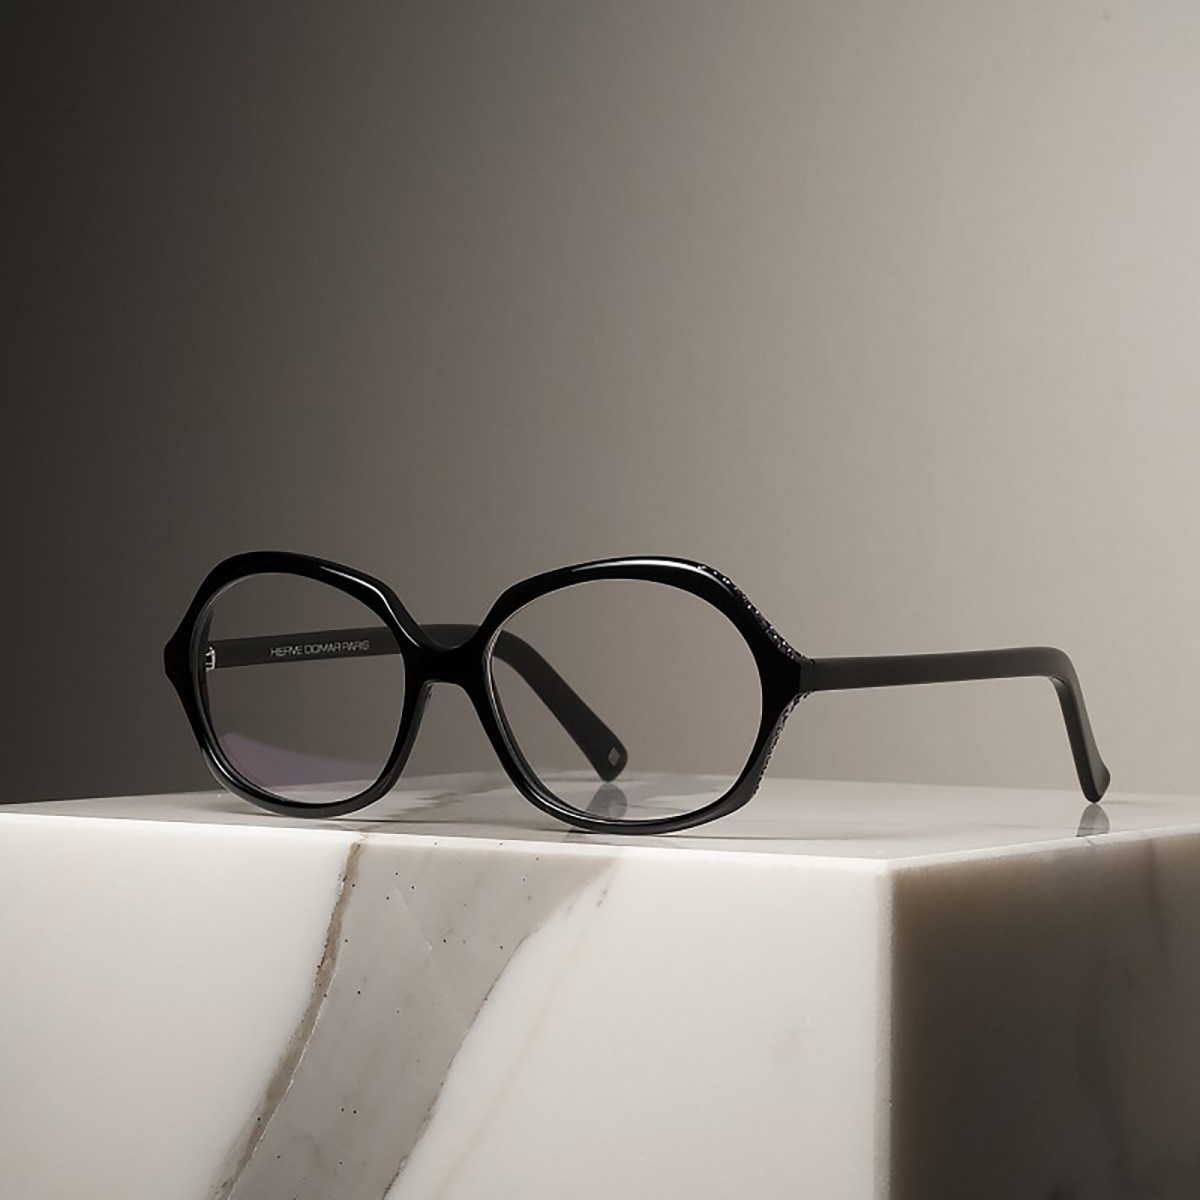 0117 RHINESTONE - Glasses in acetate handmade in France